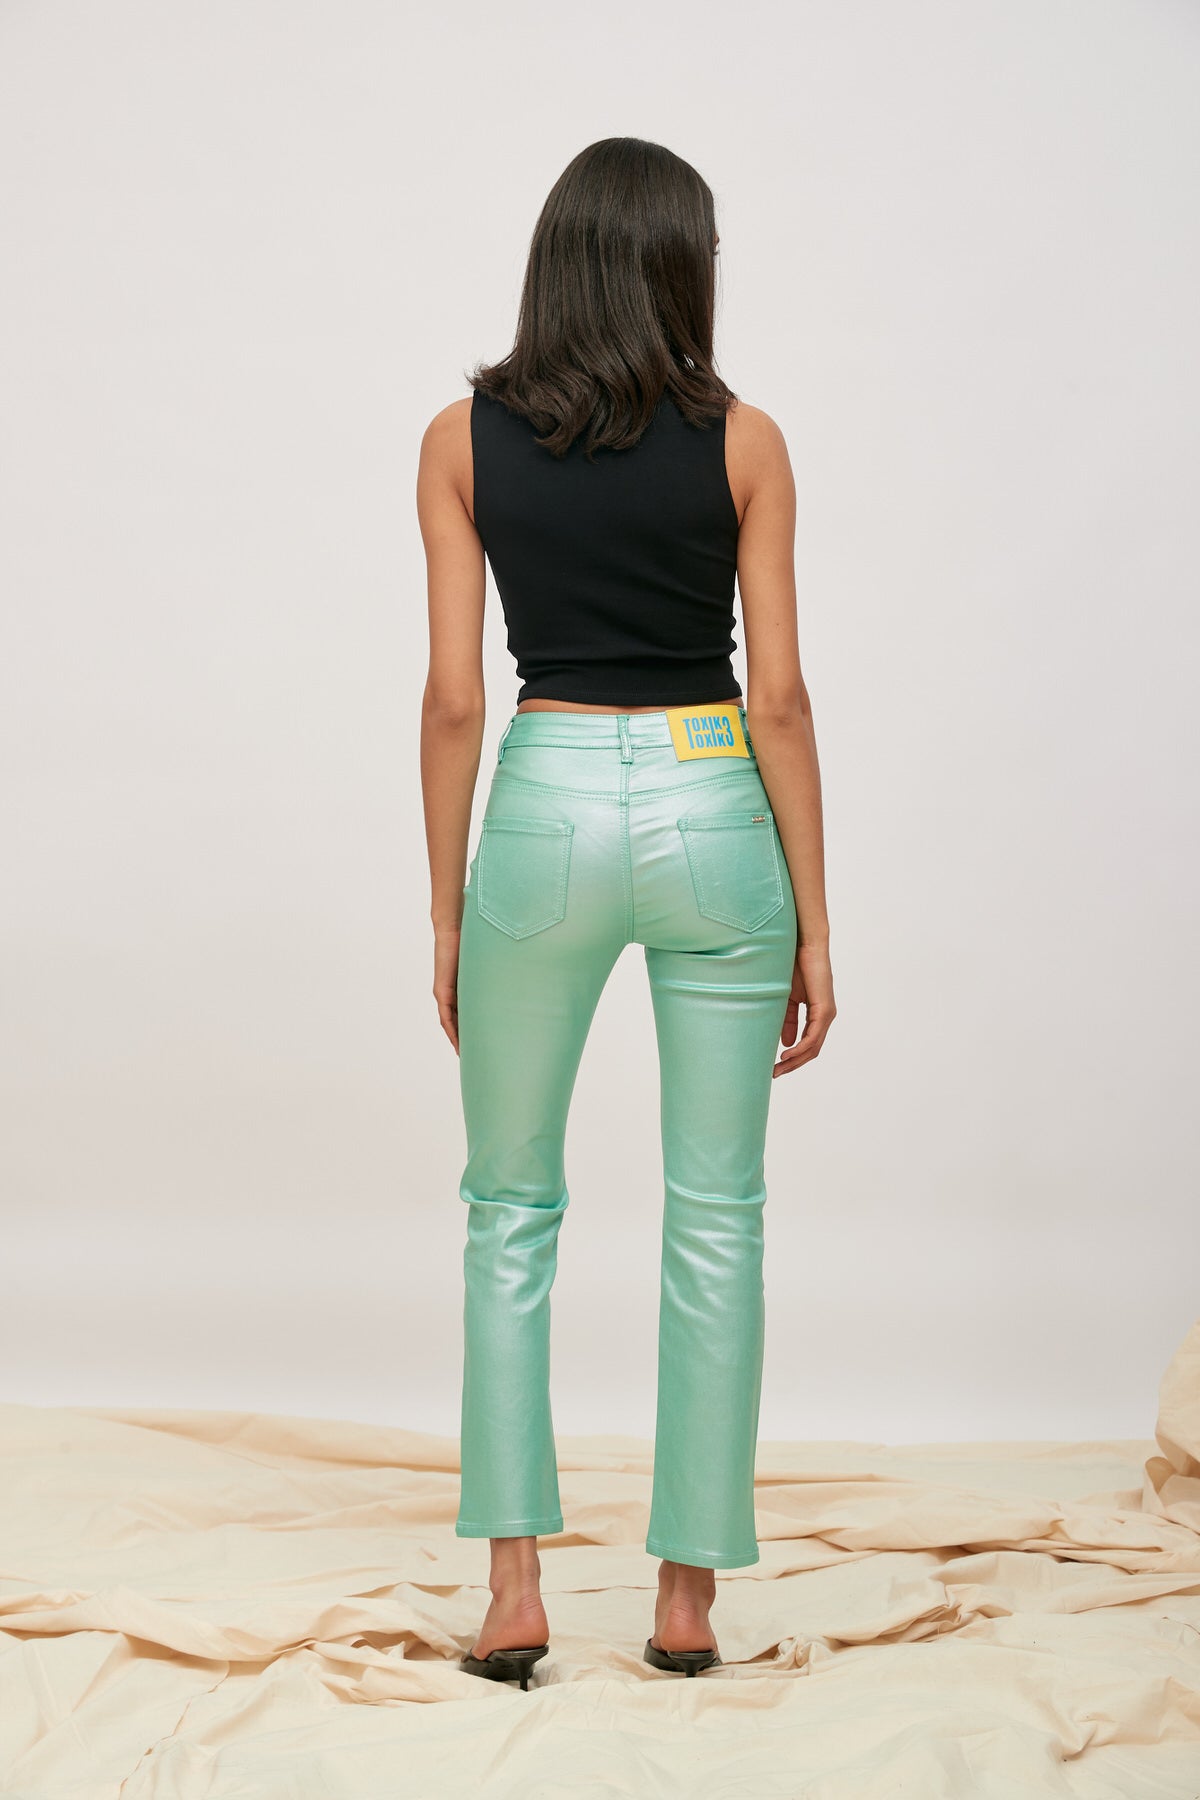 Pure Glow - Glowy coating pants